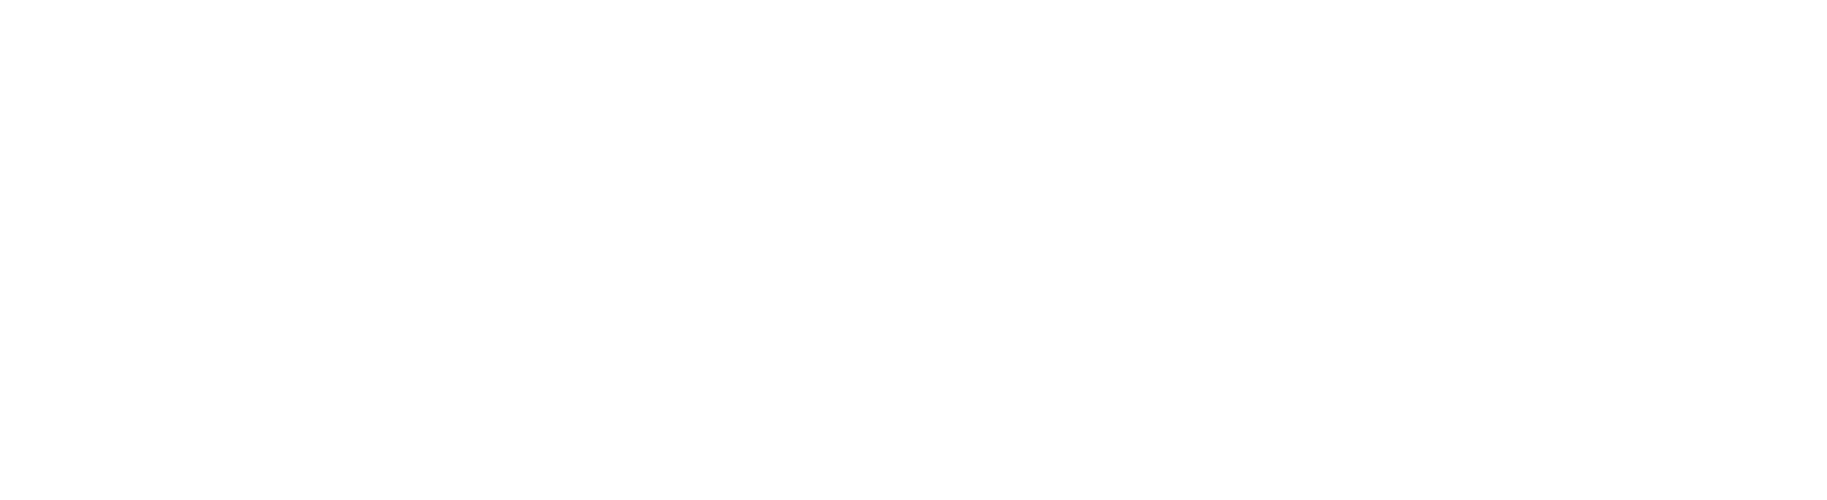 Regency Place Apartments Logo